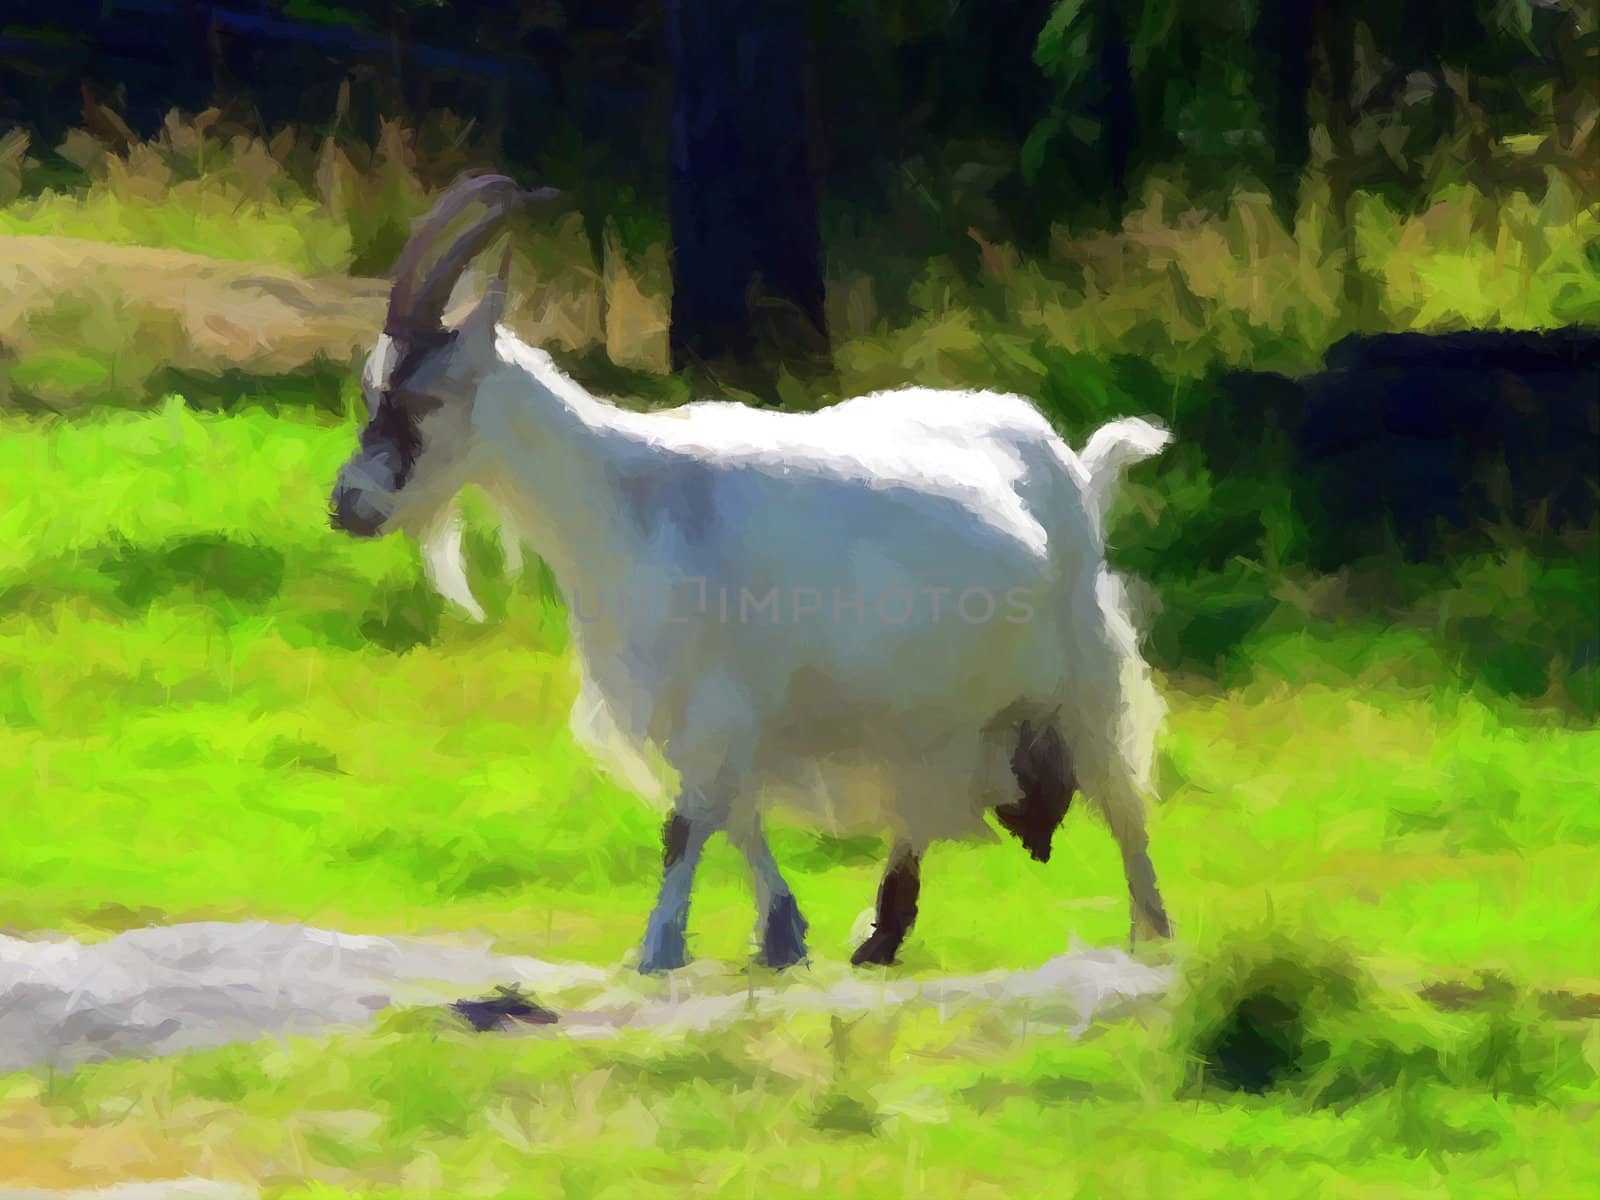 Goat by shrenk